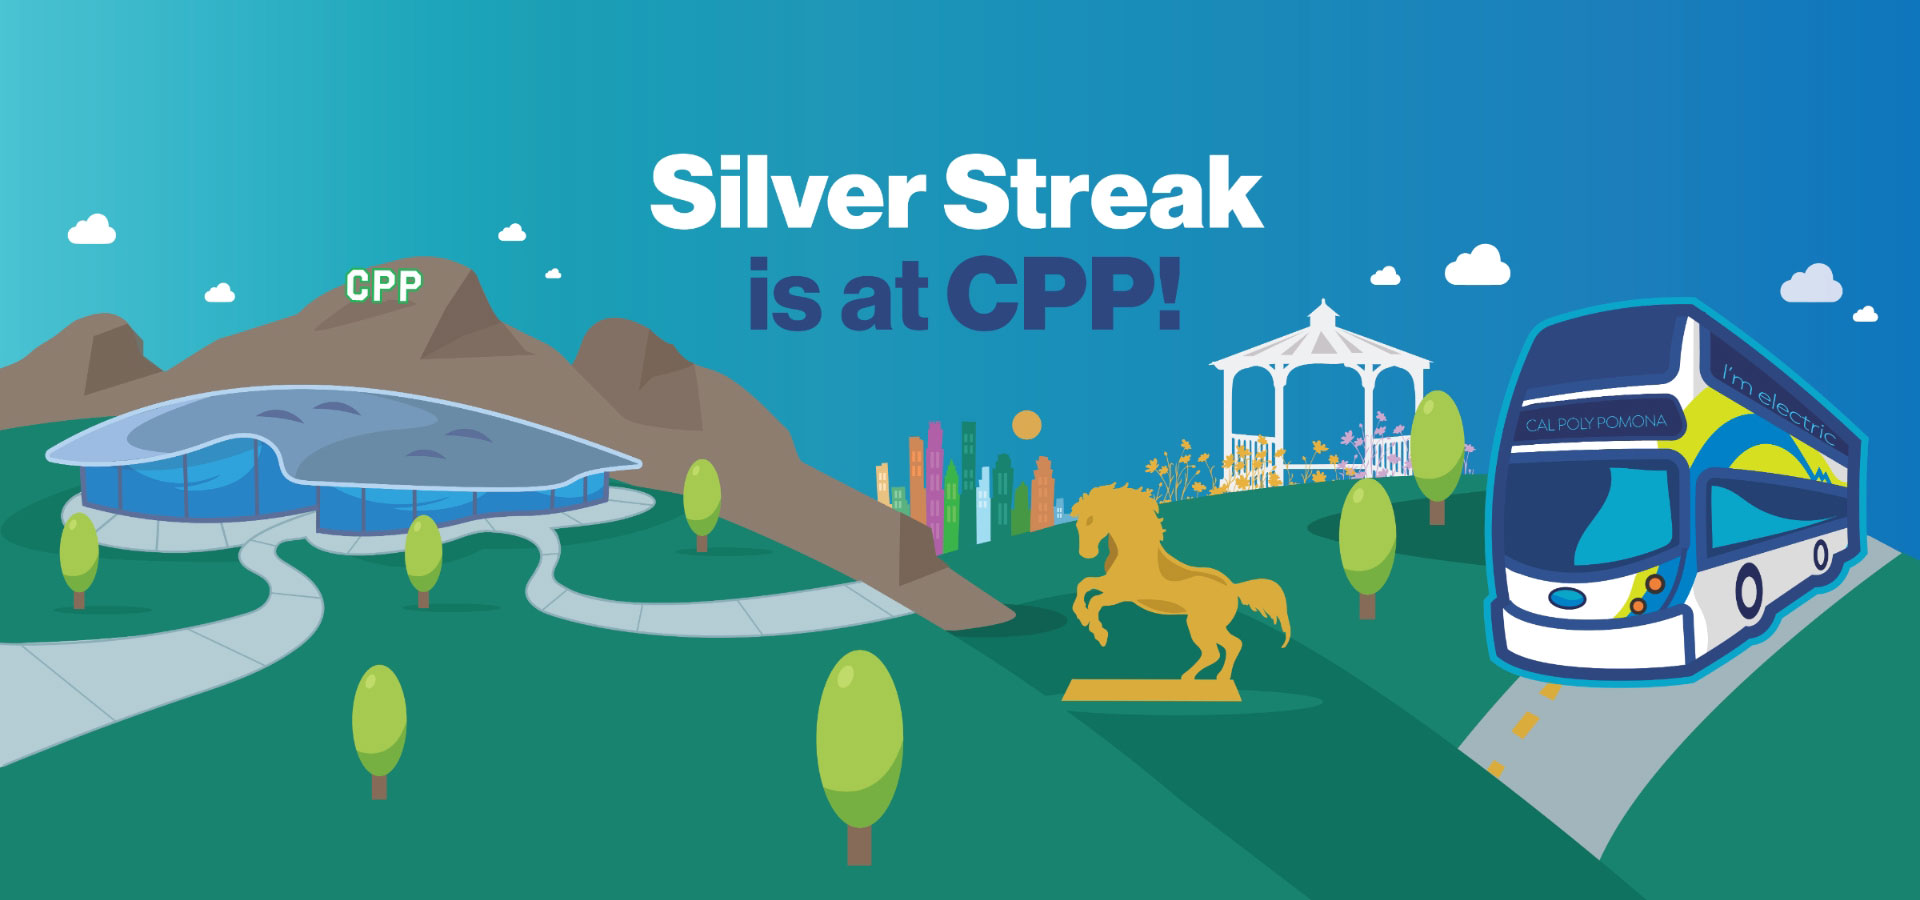 Silver Streak at CPP